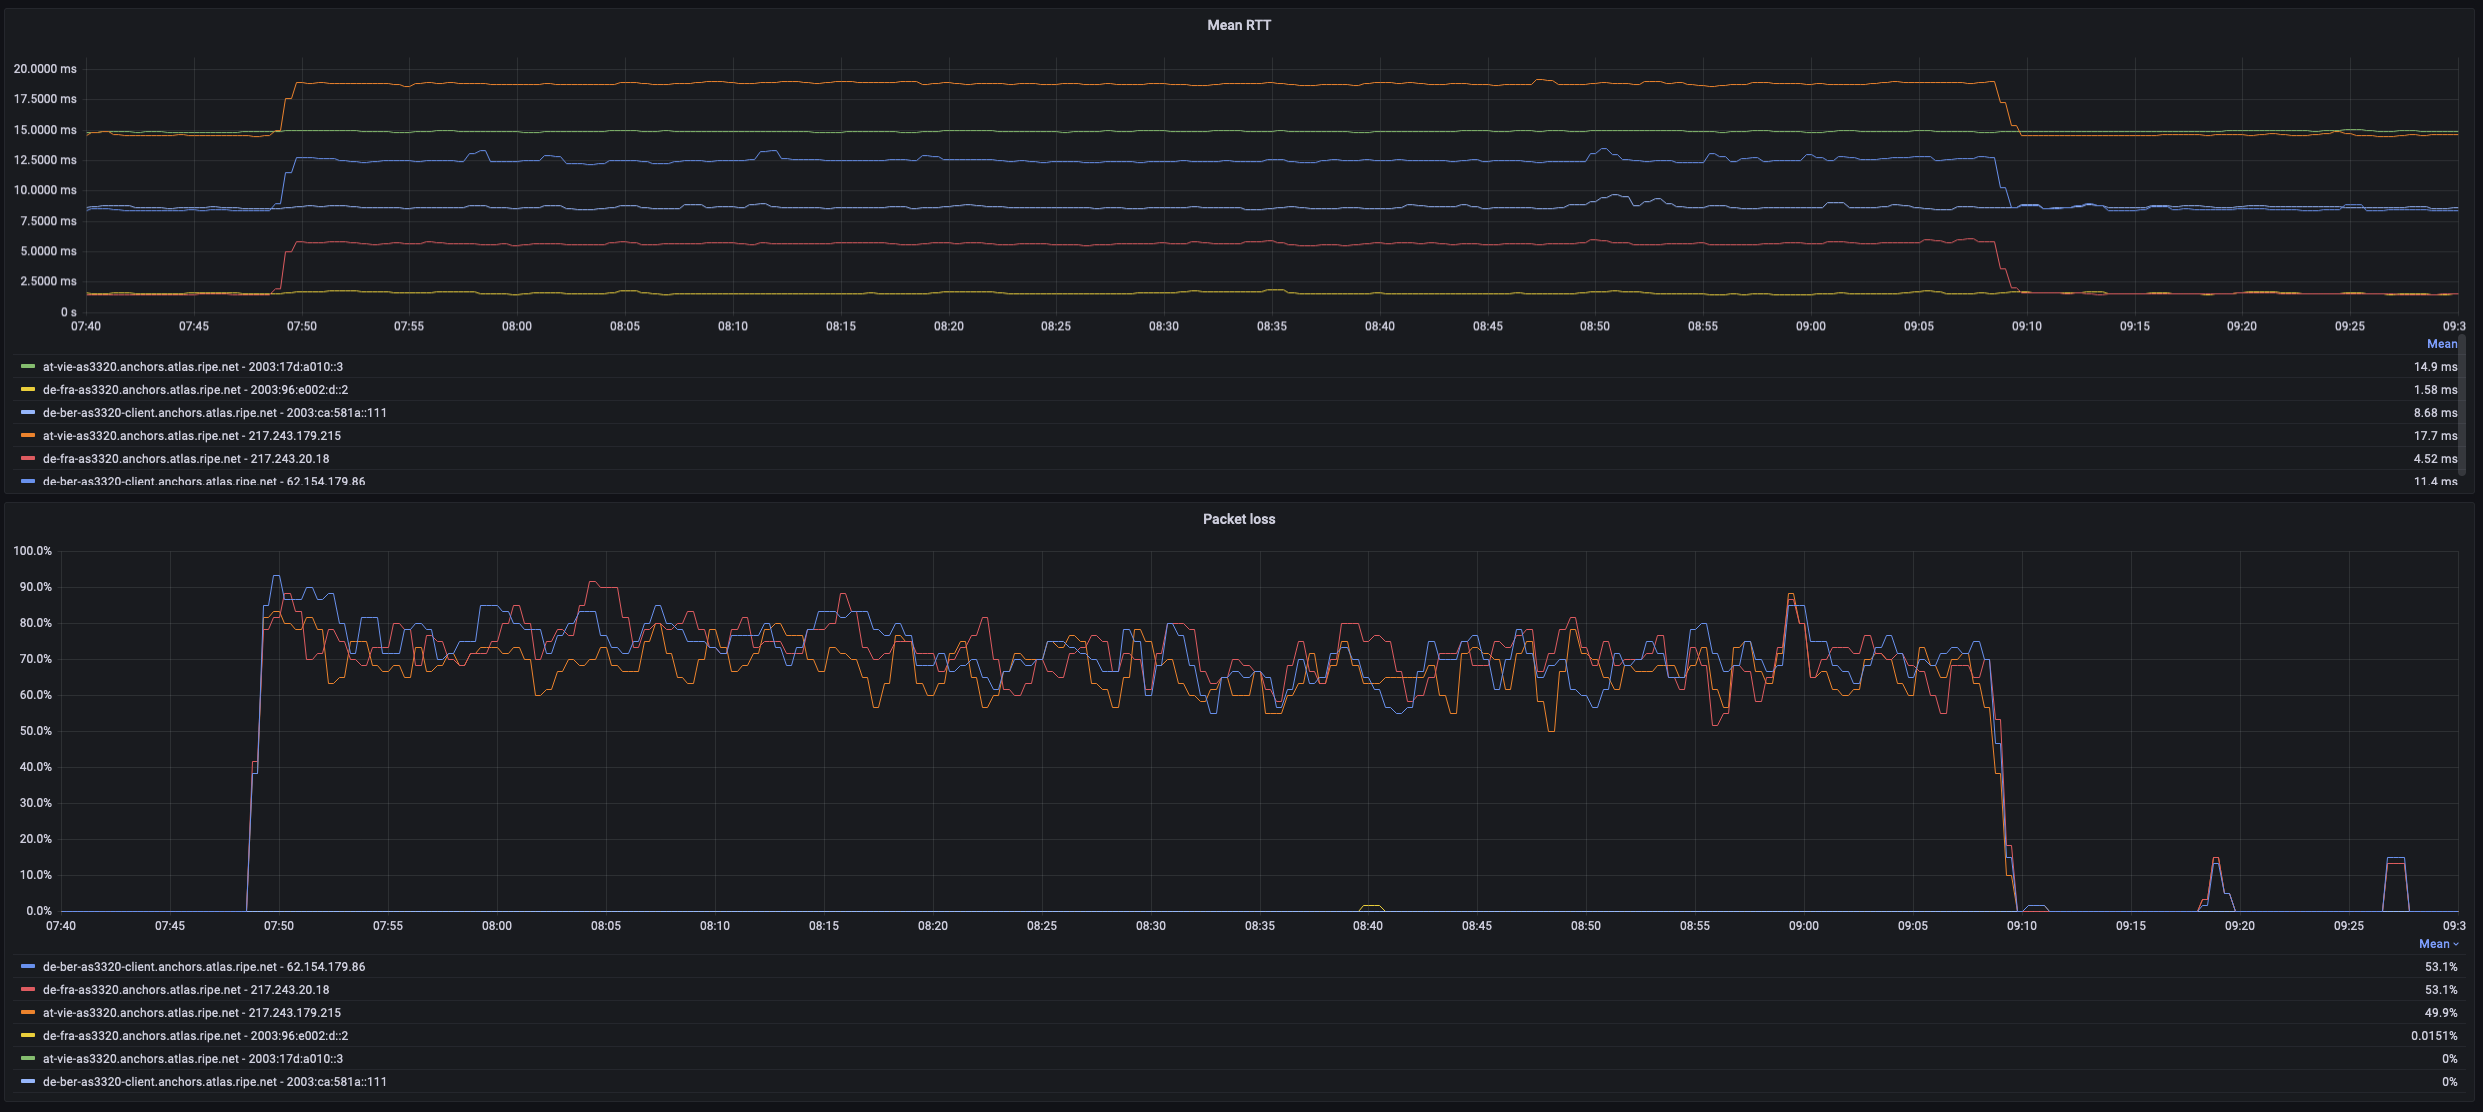 Grafana Dashboard showing increased latency and packetloss